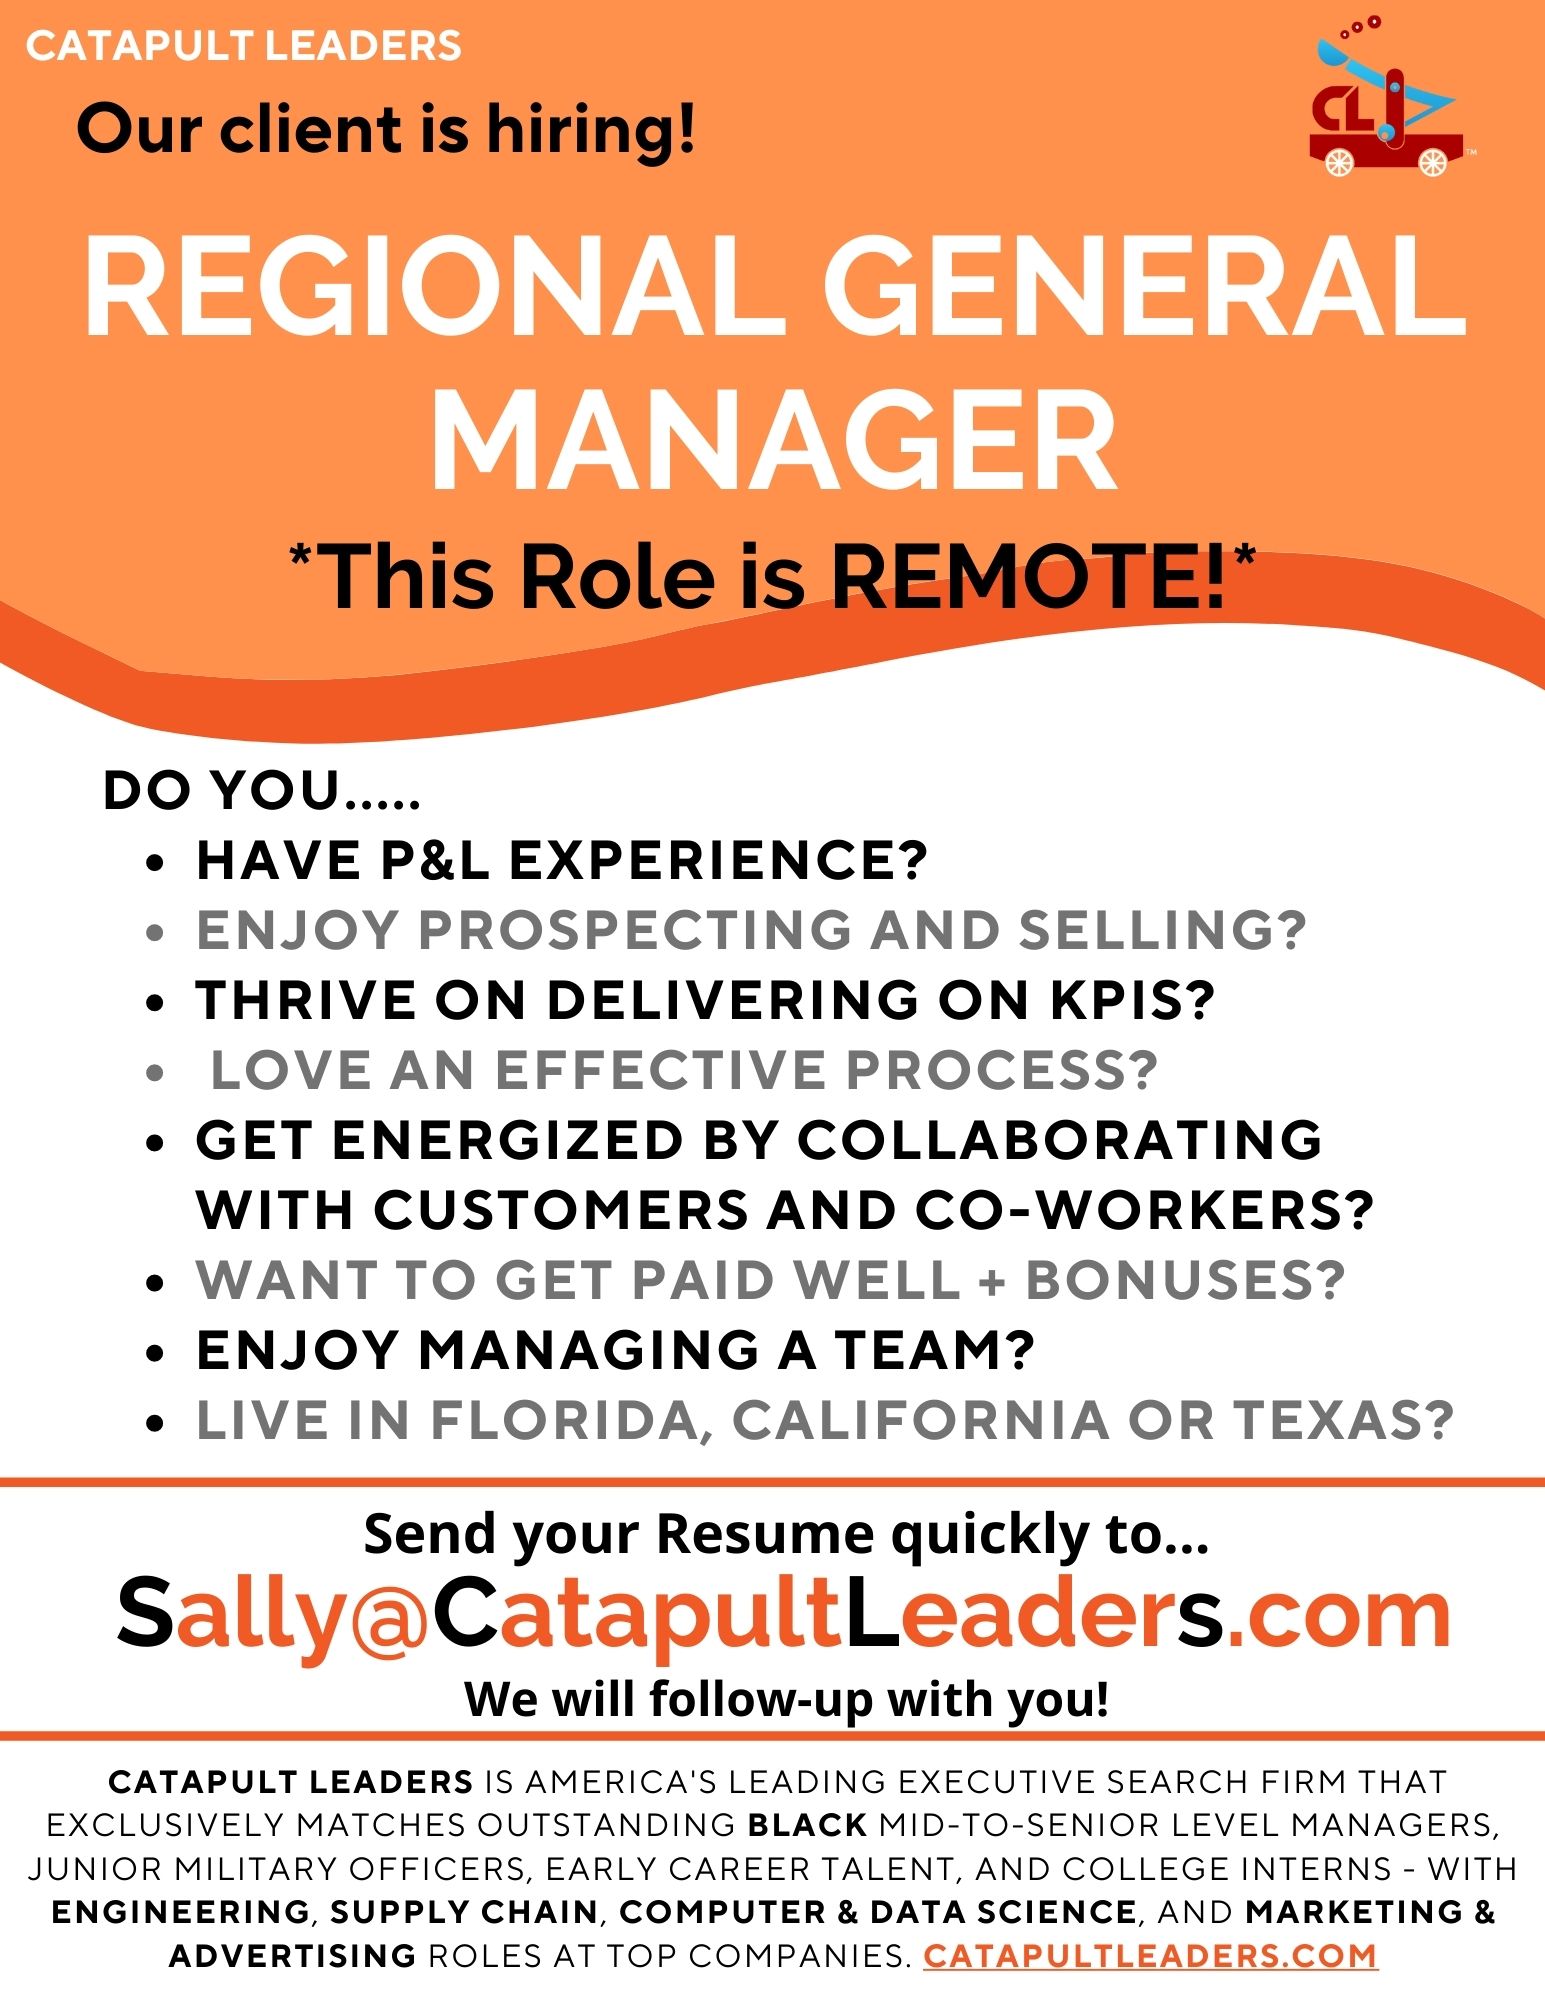 regional general manager job - catapult leaders